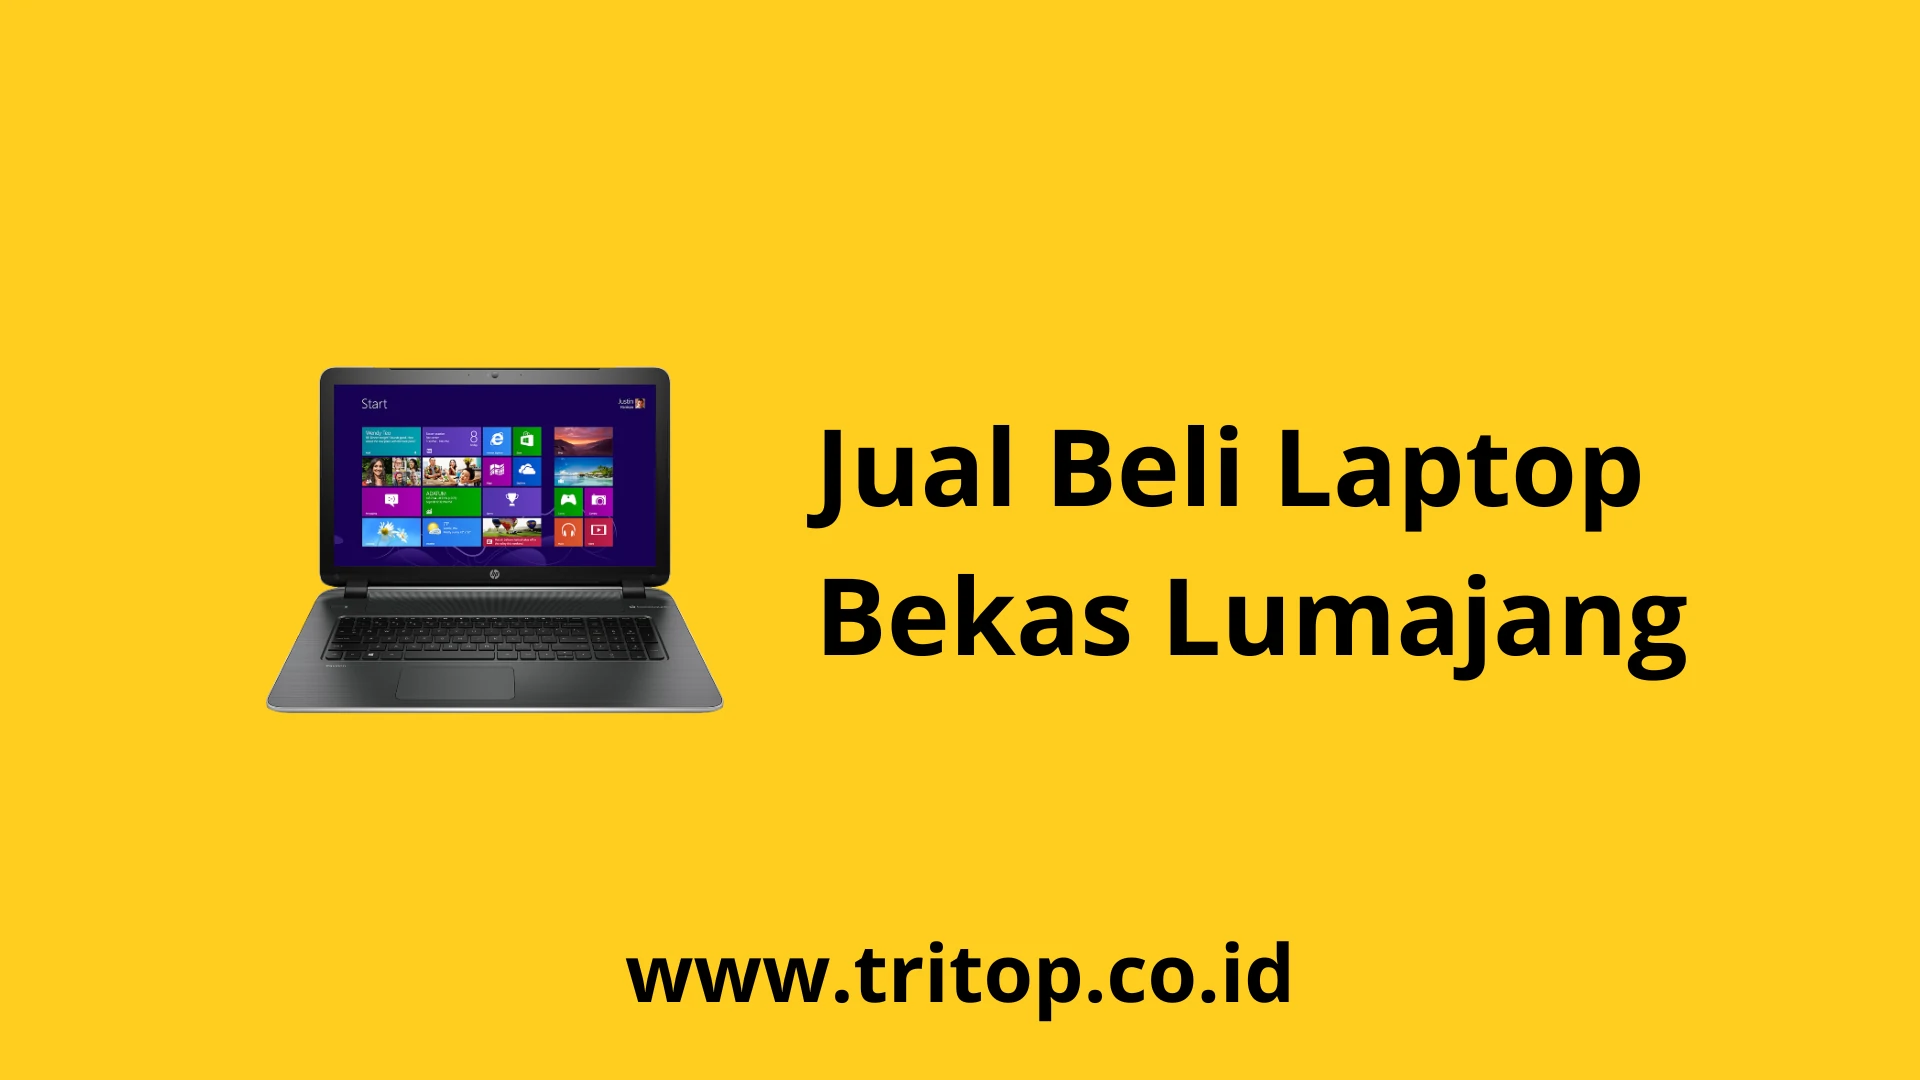 Jual Beli Laptop Bekas Lumajang www.tritop.co.id